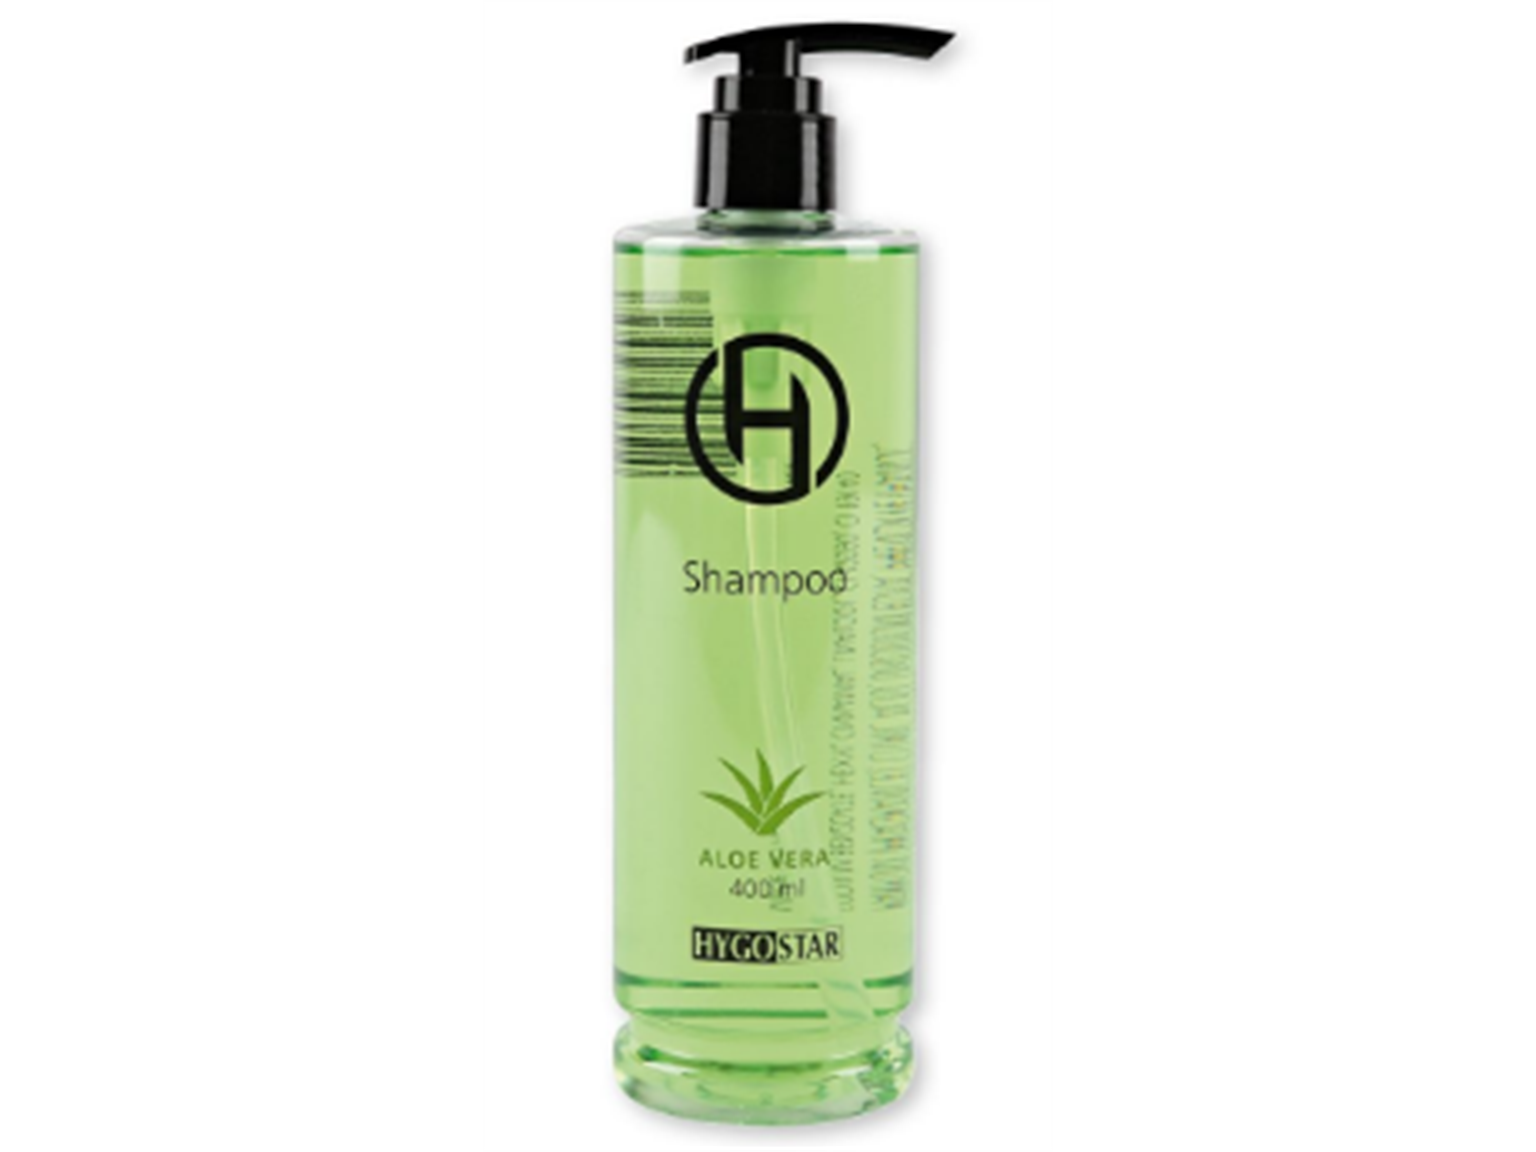 SHAMPOO HYGOSTAR  Shampoo, Pumpspender, 400 ml